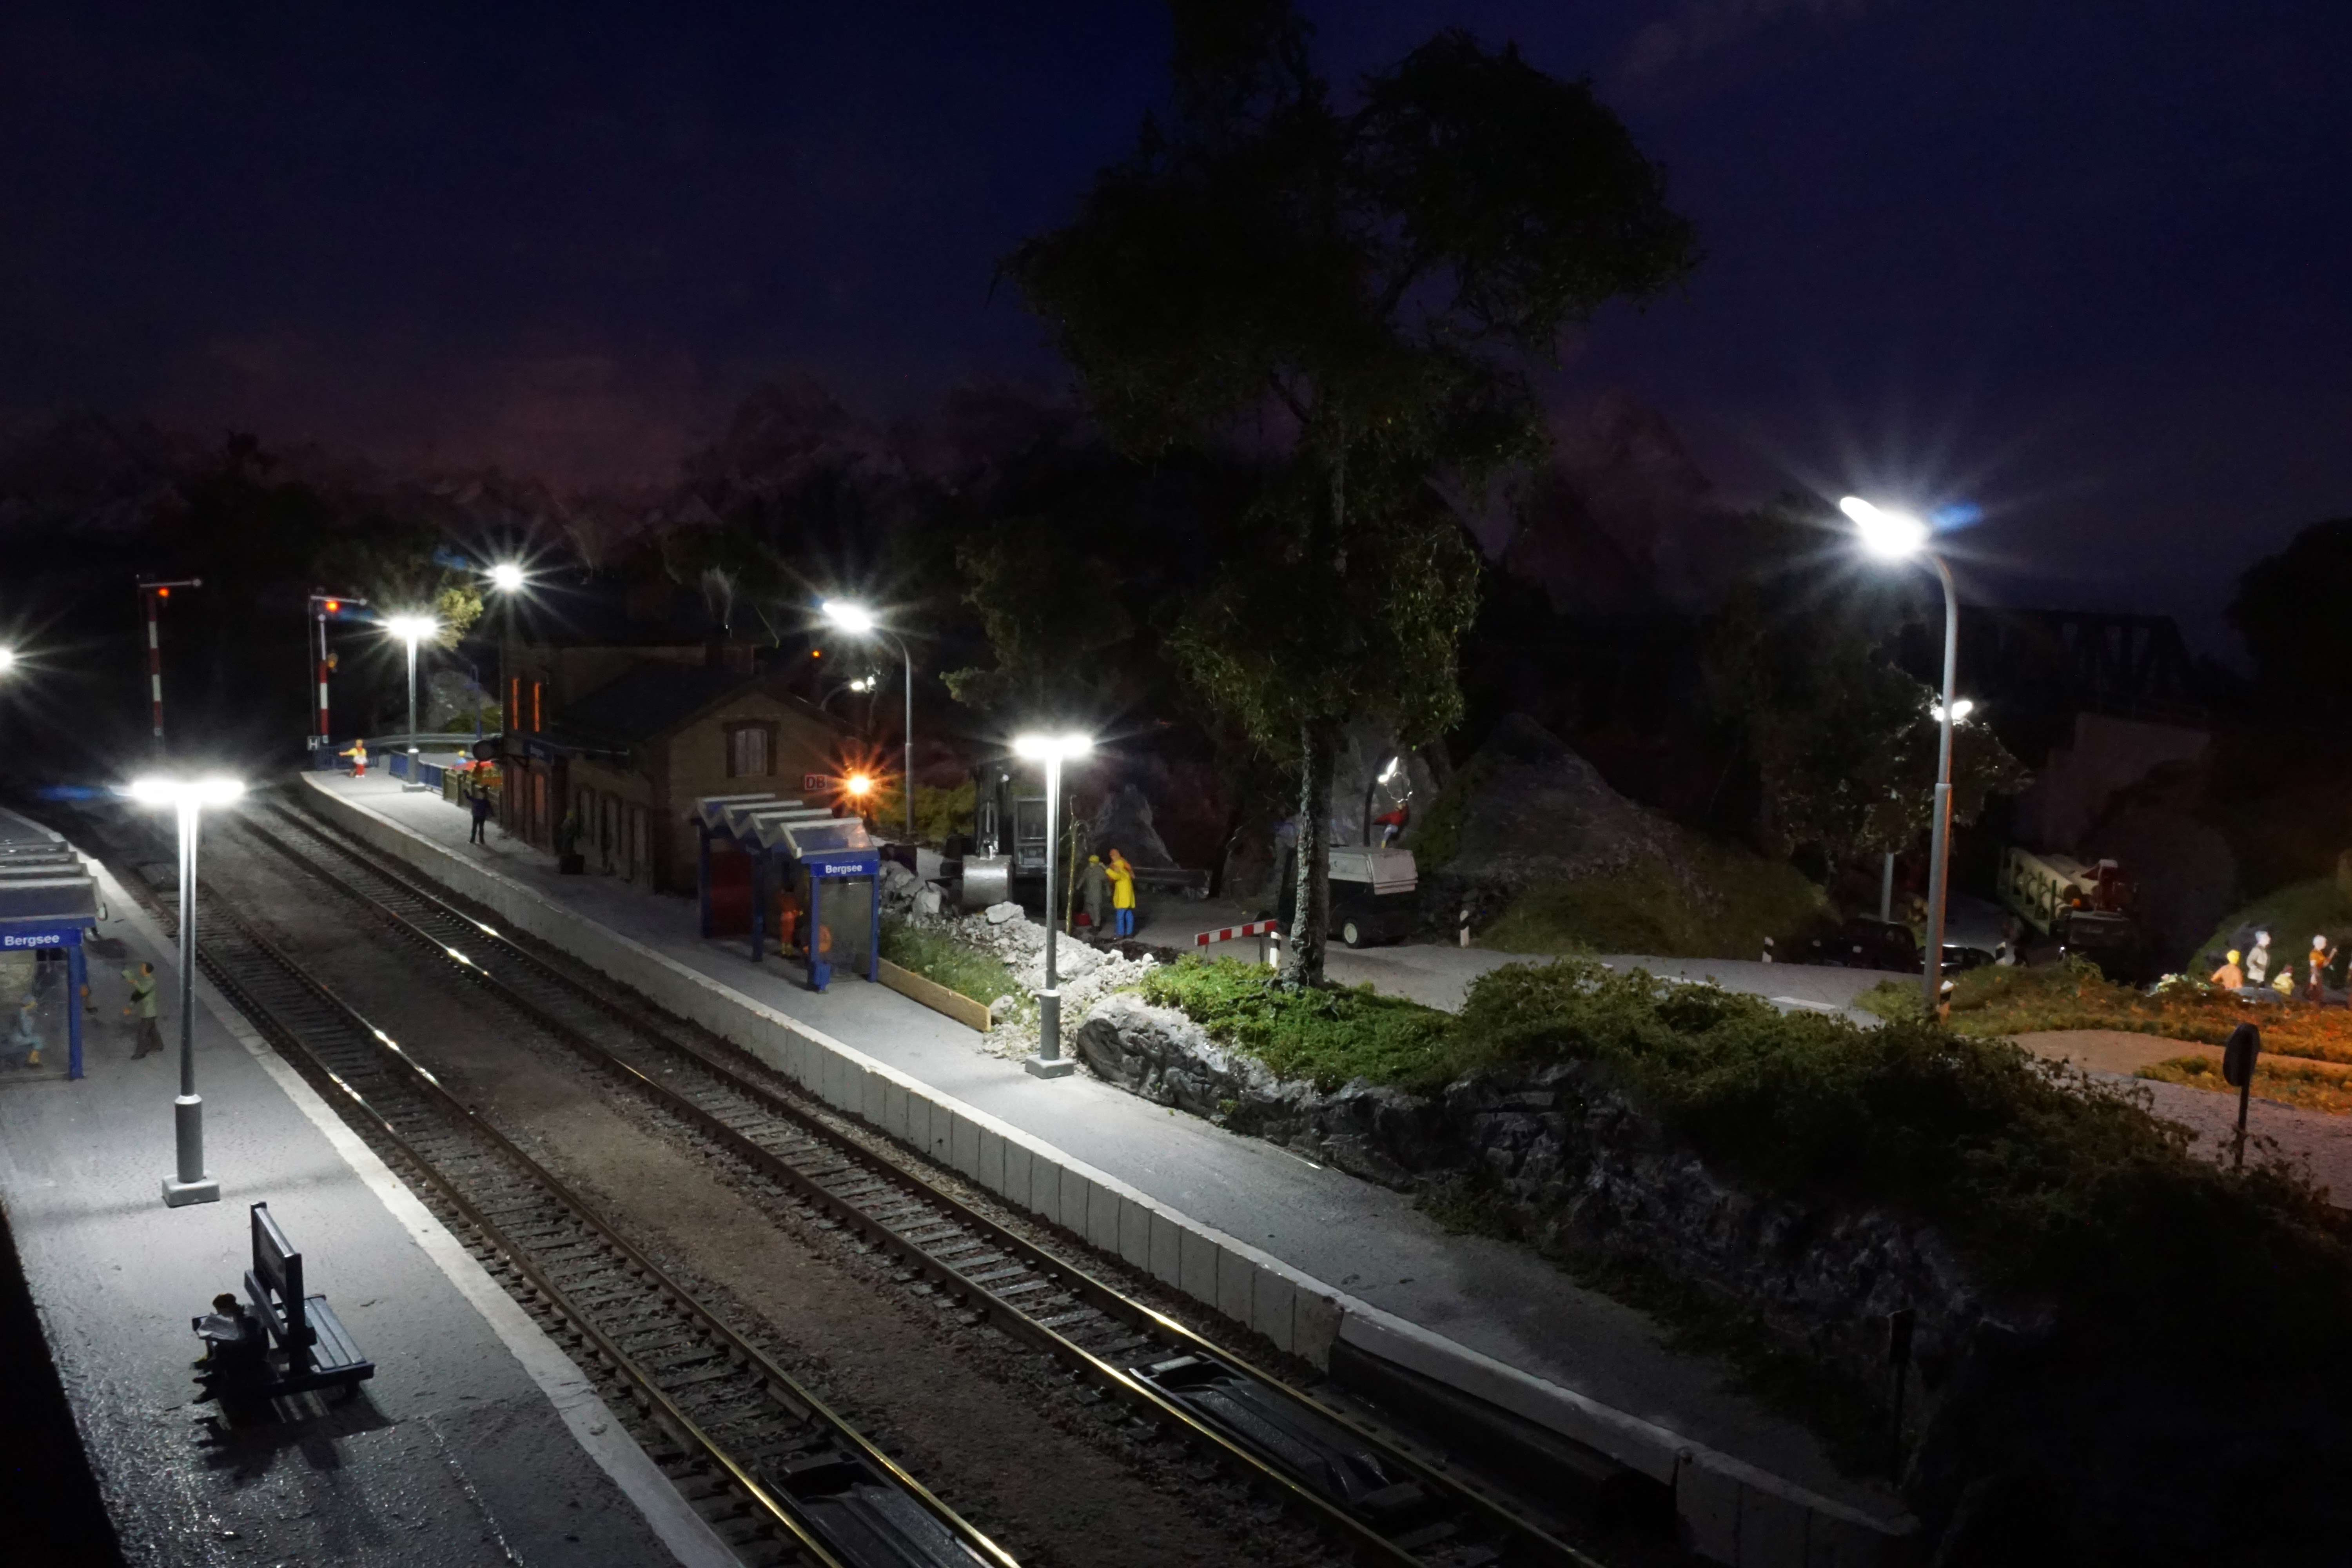 Bahnhof Bergsee bei Nacht.